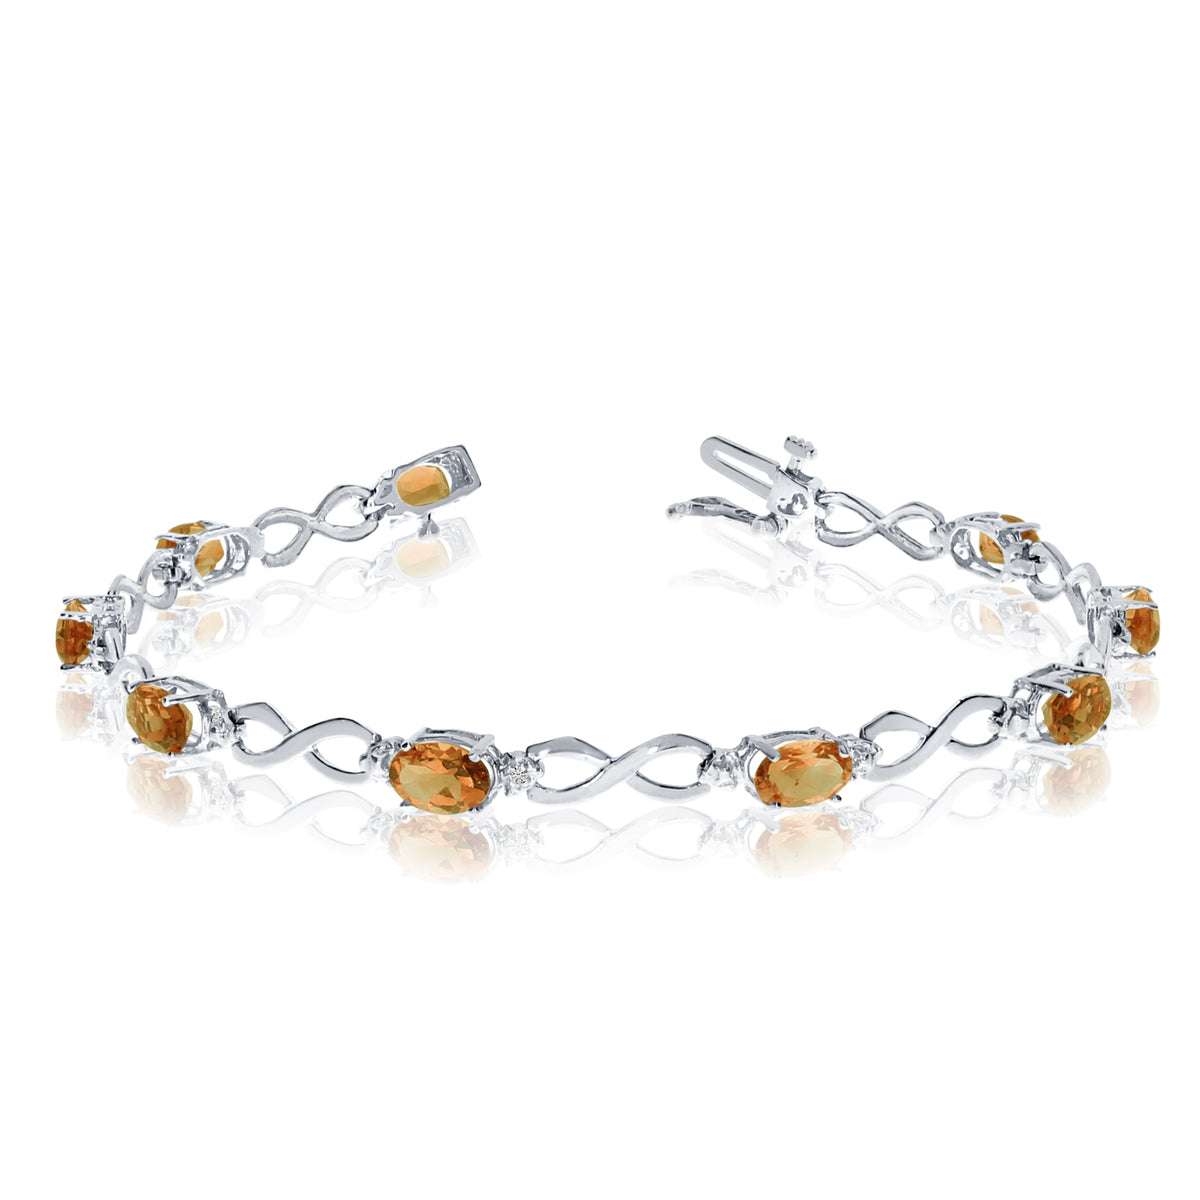 10K White Gold Oval Citrine Stones And Diamonds Infinity Tennis Bracelet, 7" fine designer jewelry for men and women